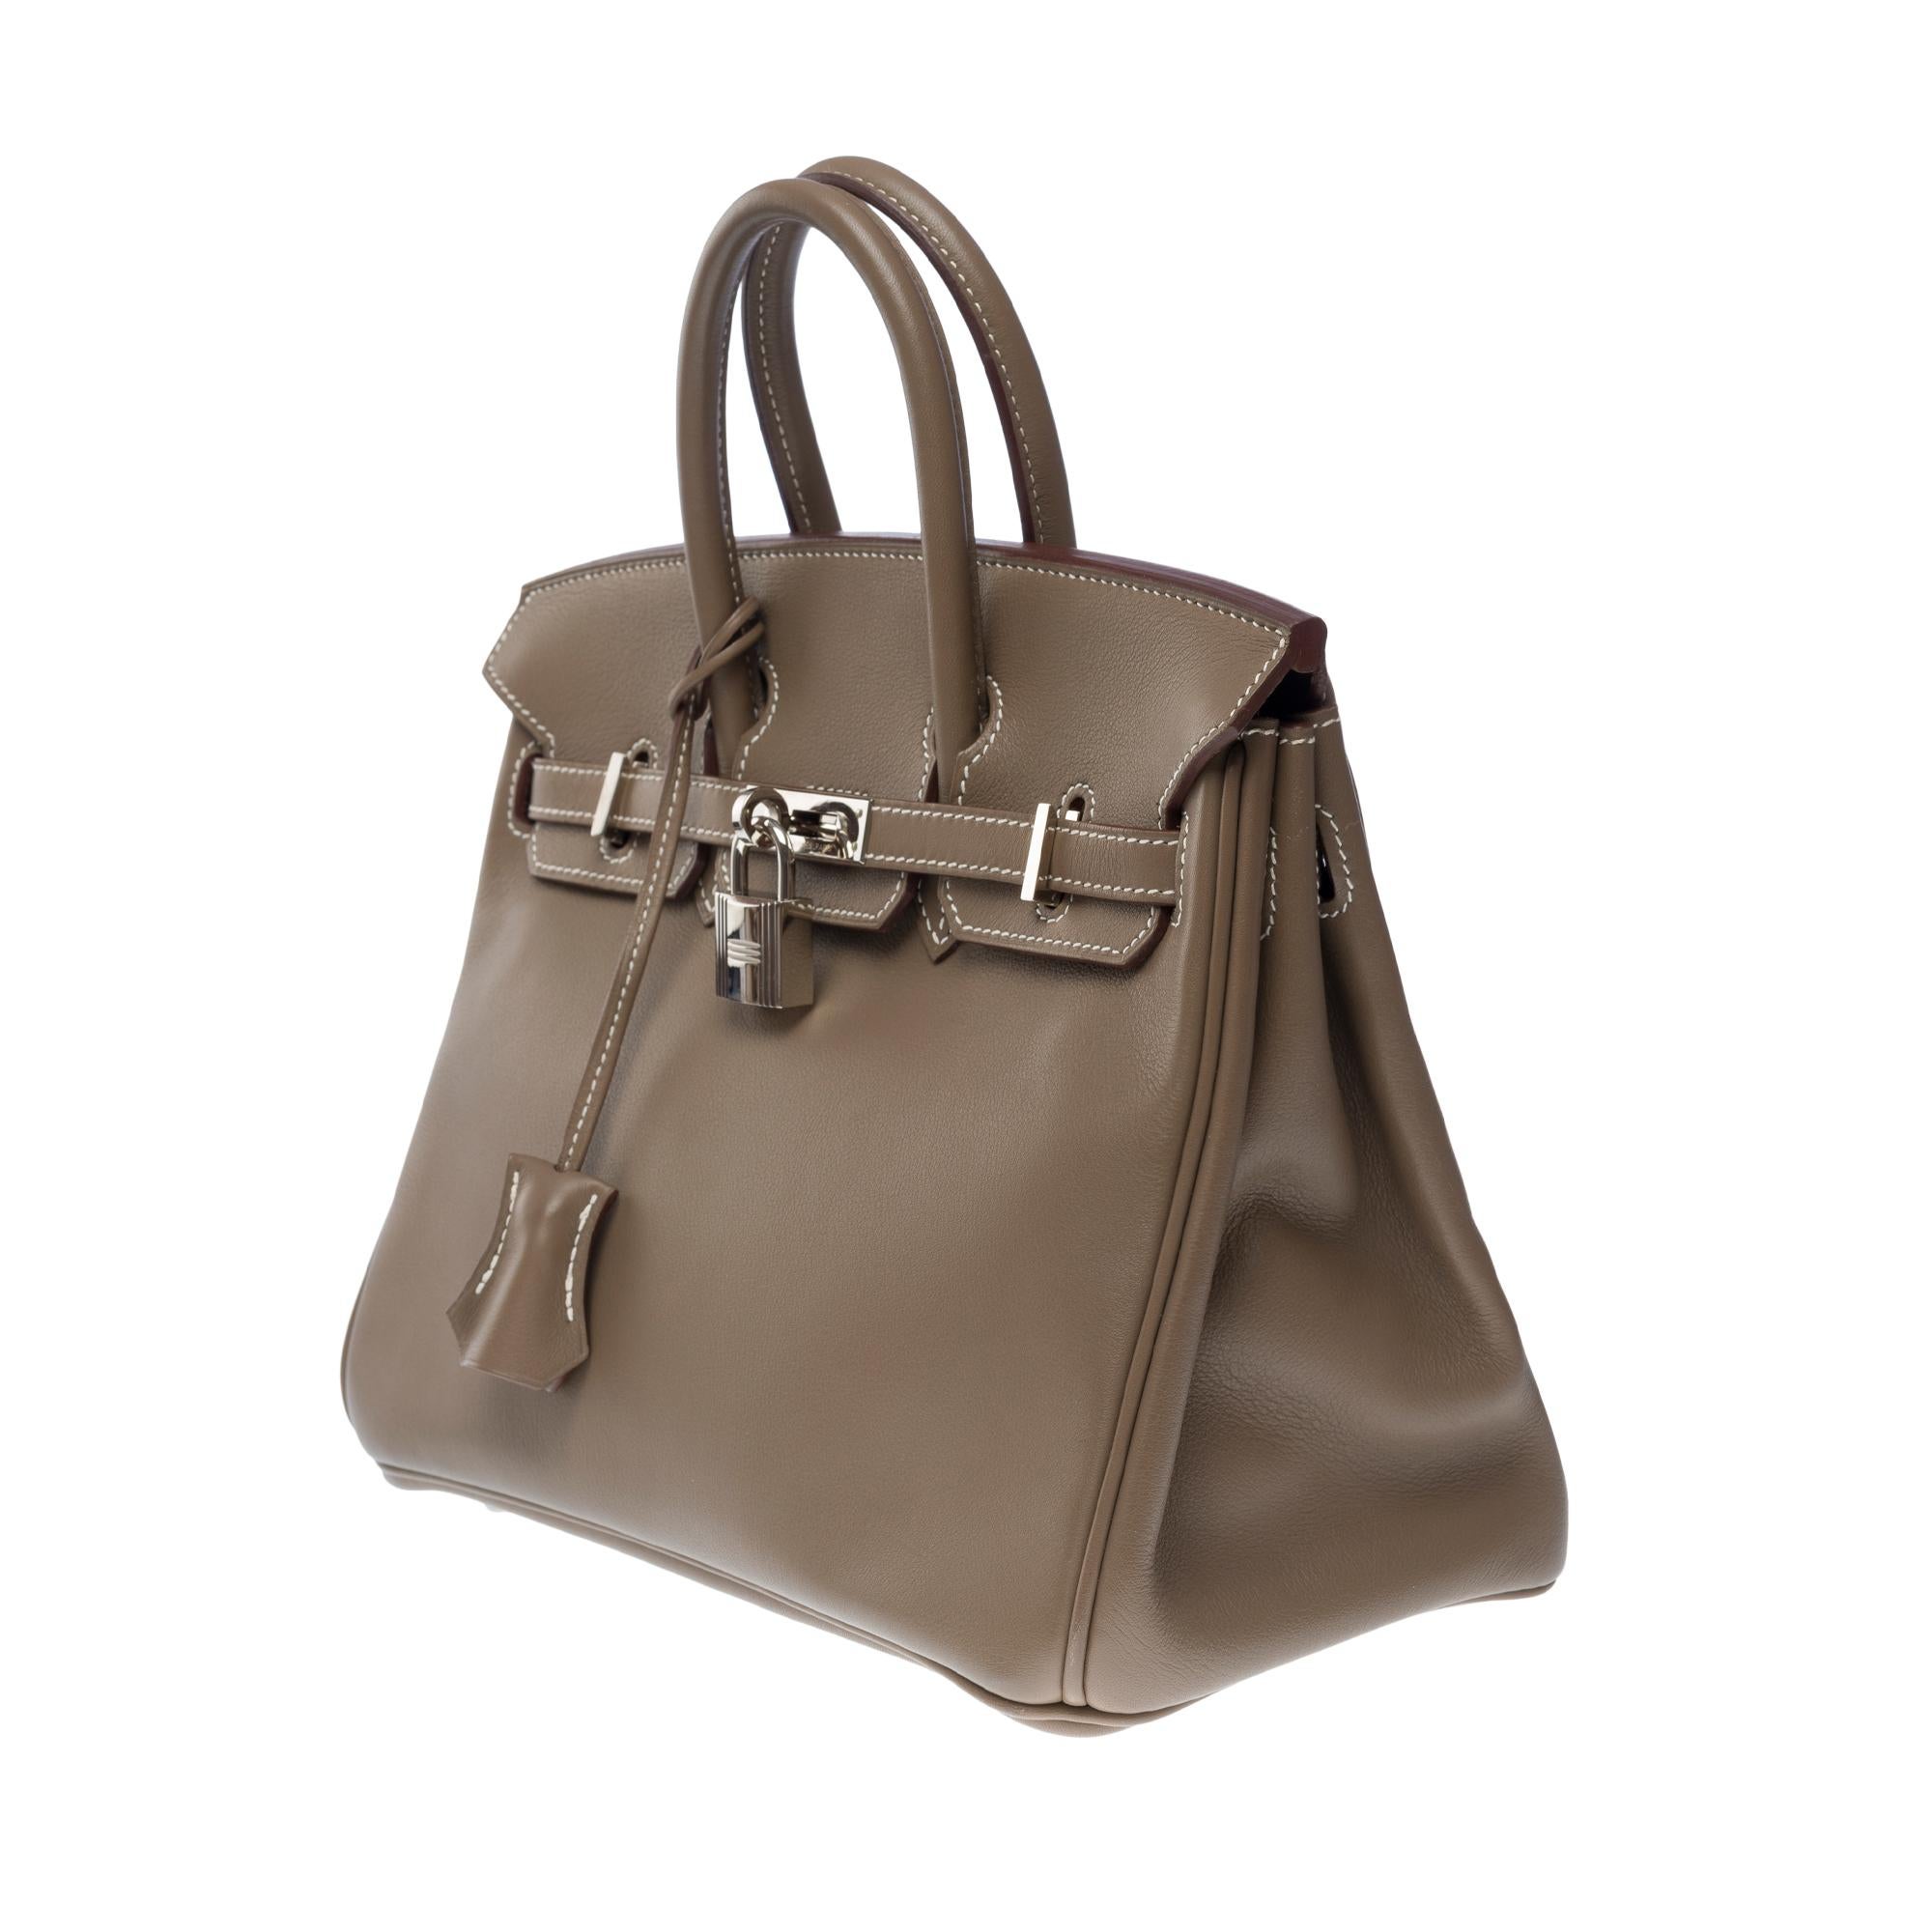 Amazing Hermes Birkin 25cm handbag in Etoupe Swift Calf leather, SHW 1